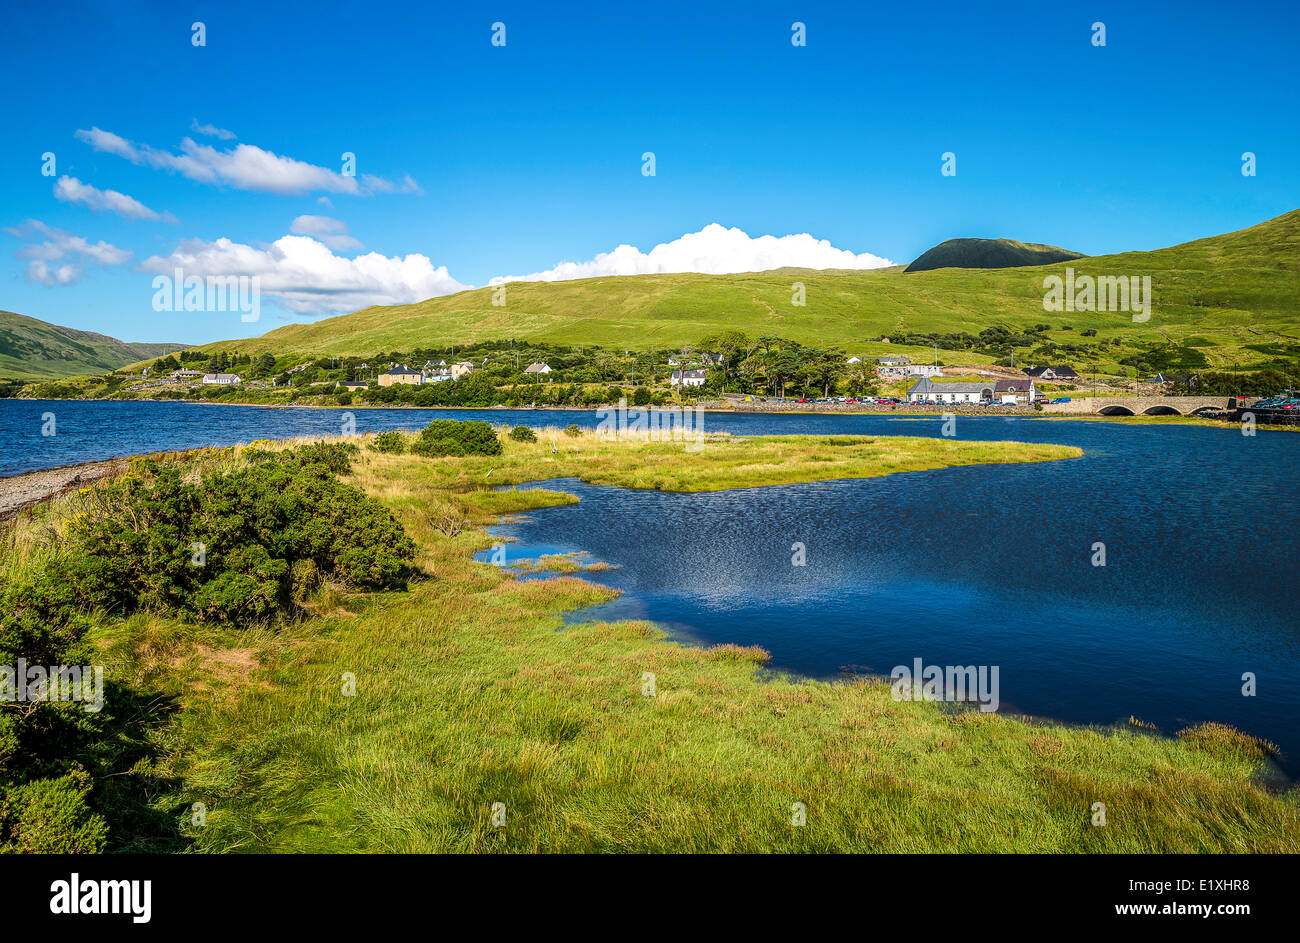 In Irlanda la contea di Galway, Connemara area, il lago Leenane Foto Stock